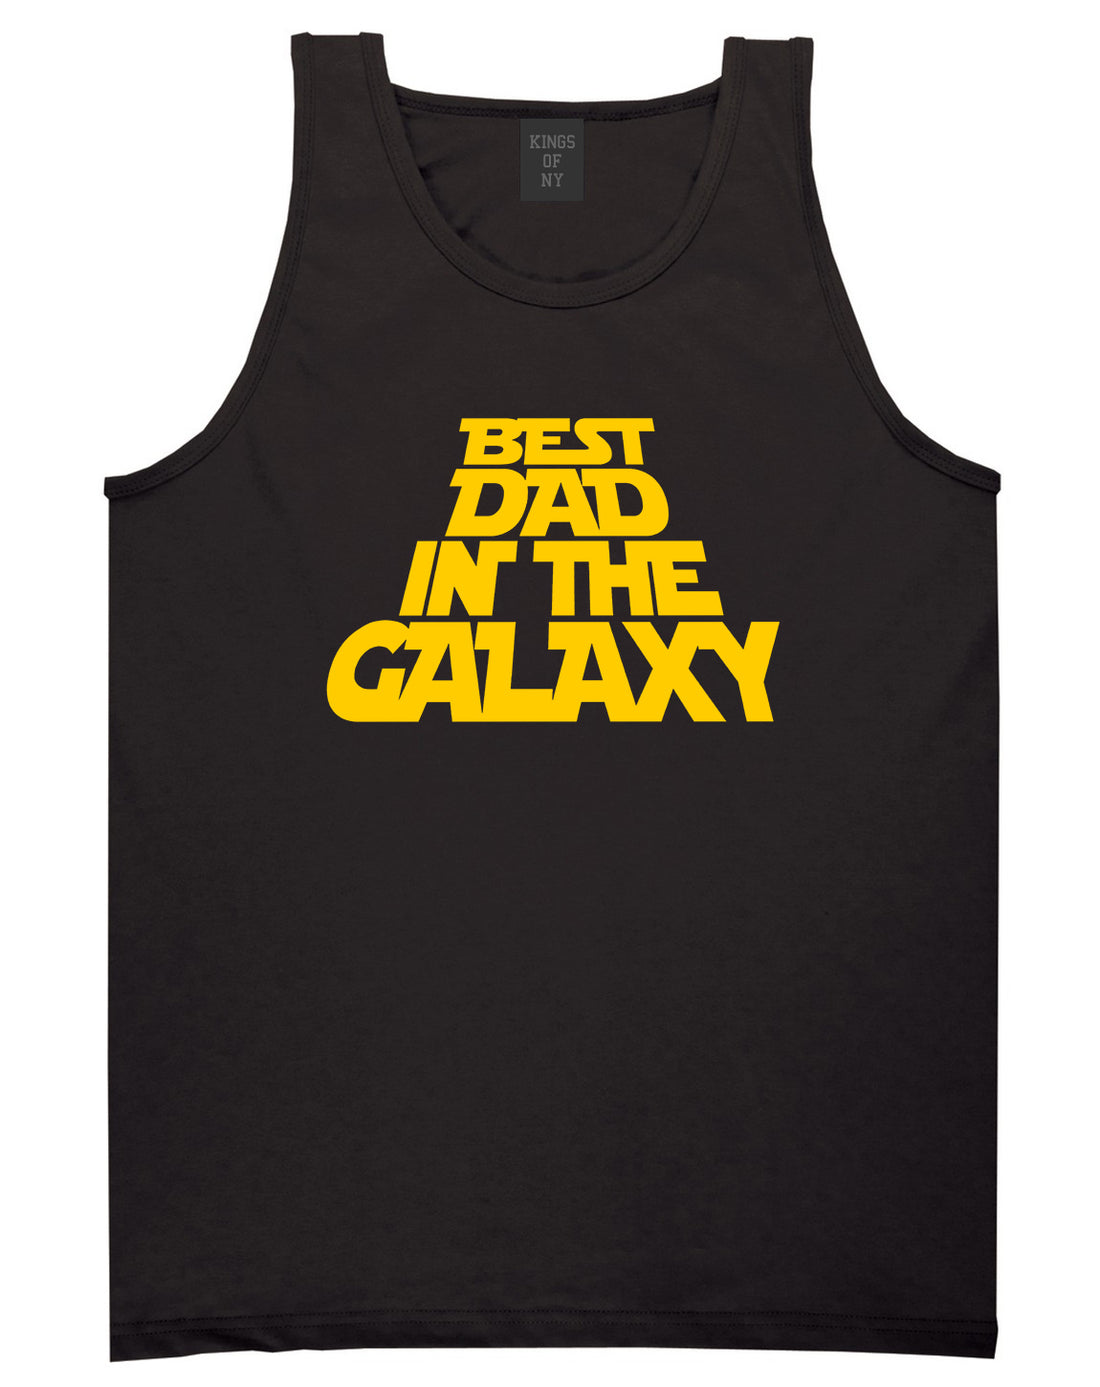 Best Dad In The Galaxy Mens Tank Top T-Shirt Black